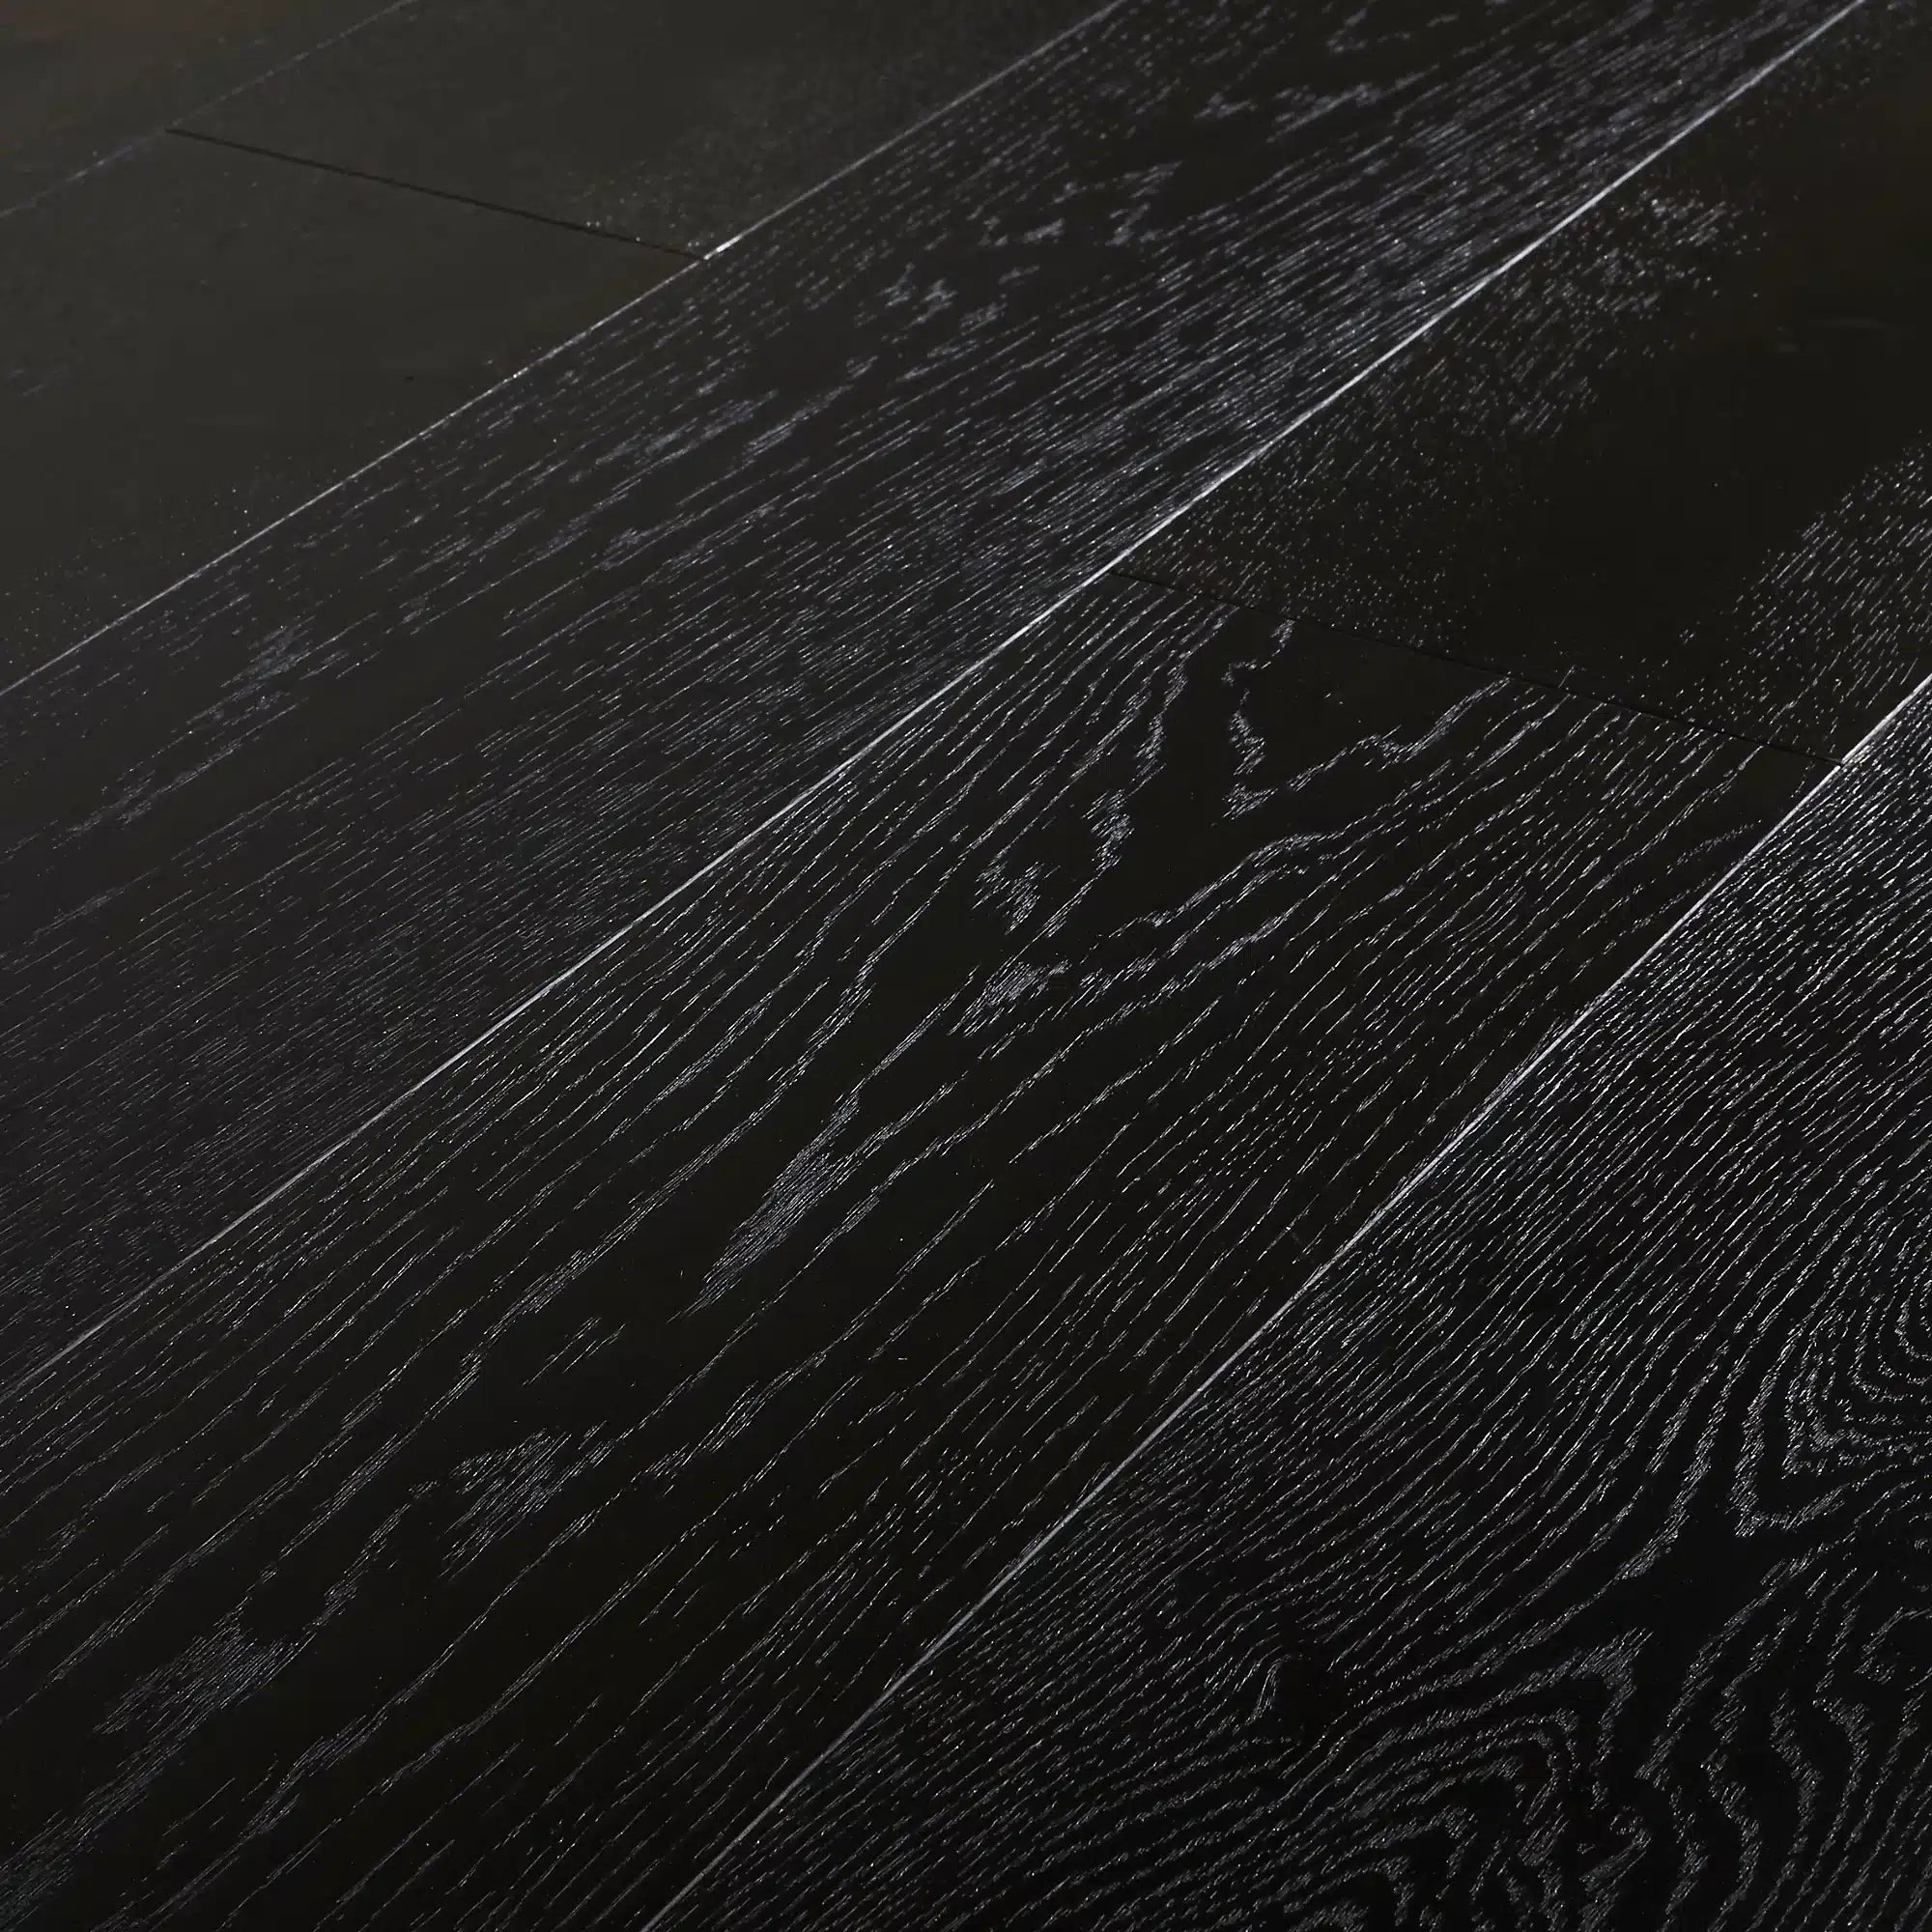 GoodHome - Herringbone Black Oak Real wood top layer flooring, 1.94m² Pack 7250